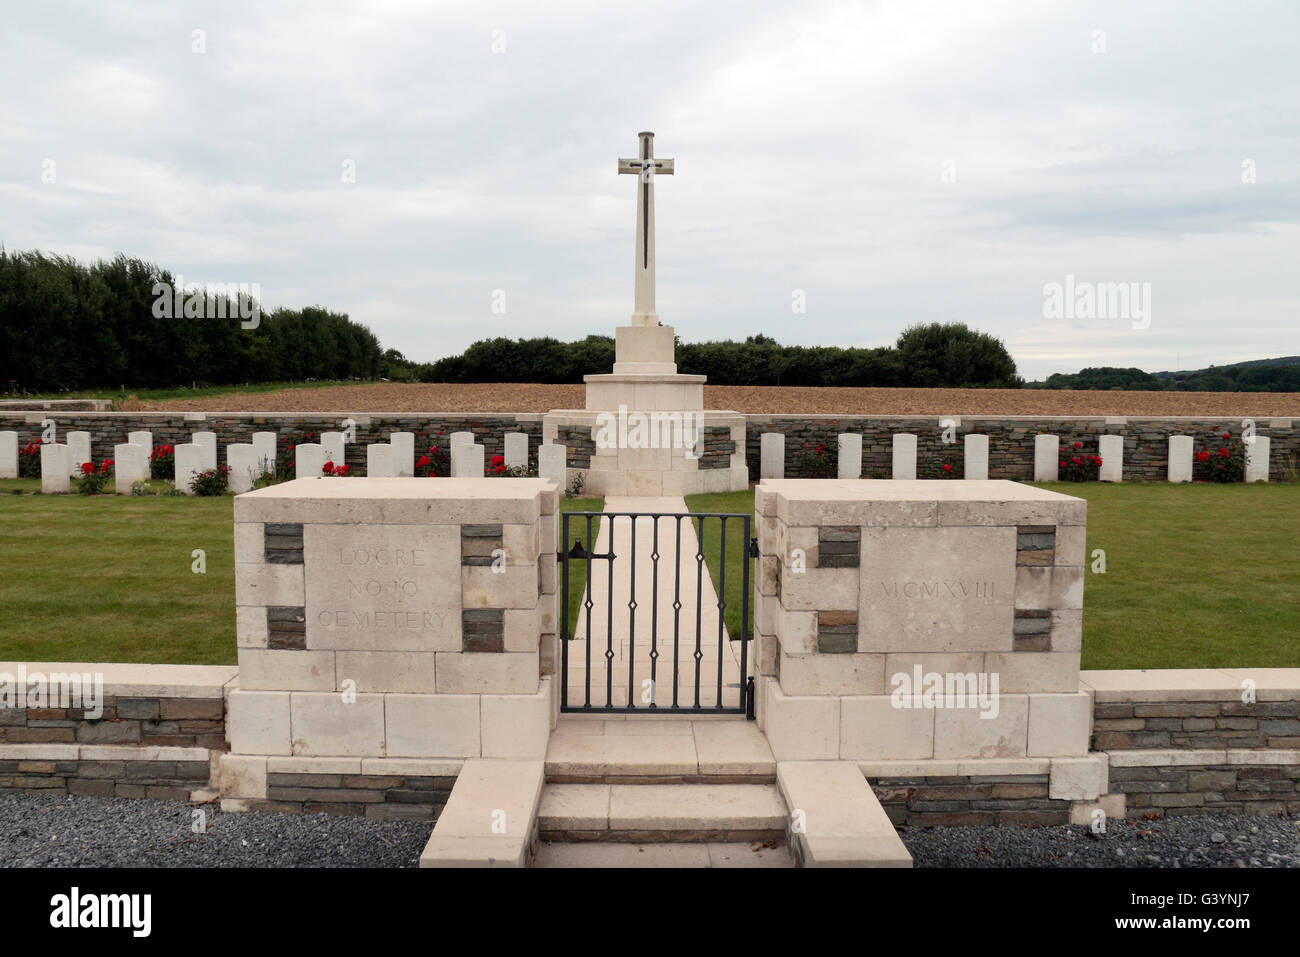 Entrance gate, Cross of Sacrifice, headstones in the CWGC Locre No 10 Cemetery, Loker, West-Vlaanderen, Belgium. Stock Photo